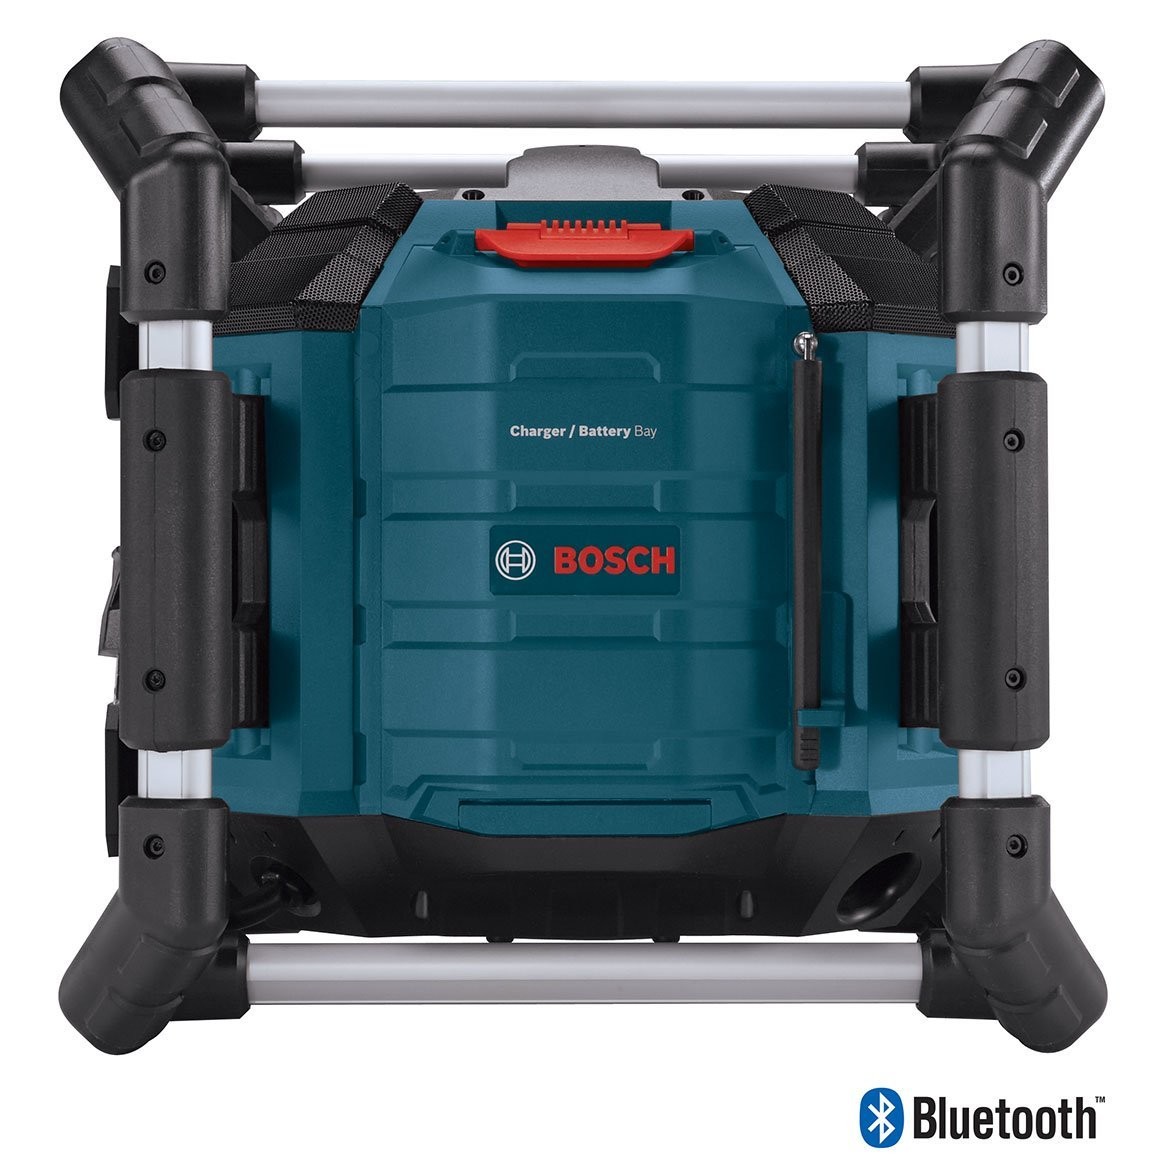 Bosch Bosch PB360C power box job site AM/FM radio / charger / digital media stereo 